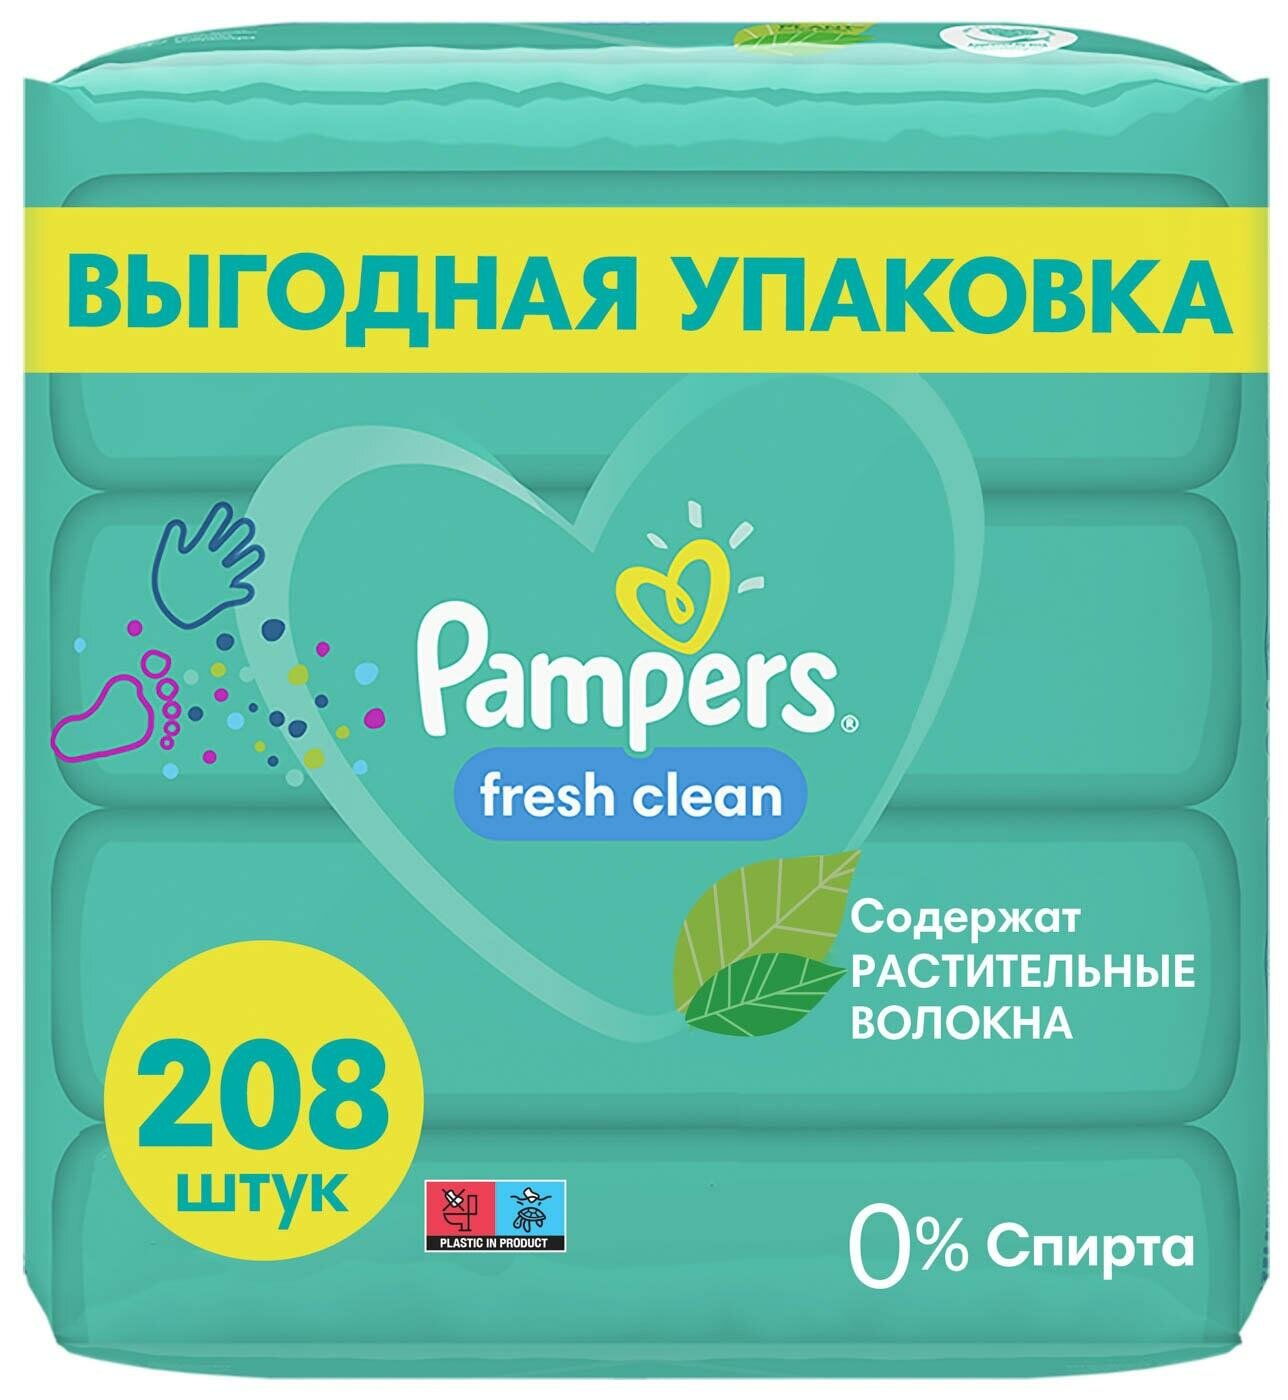 Pampers / Салфетки влажные Pampers Fresh Clean детские 208шт 3 уп